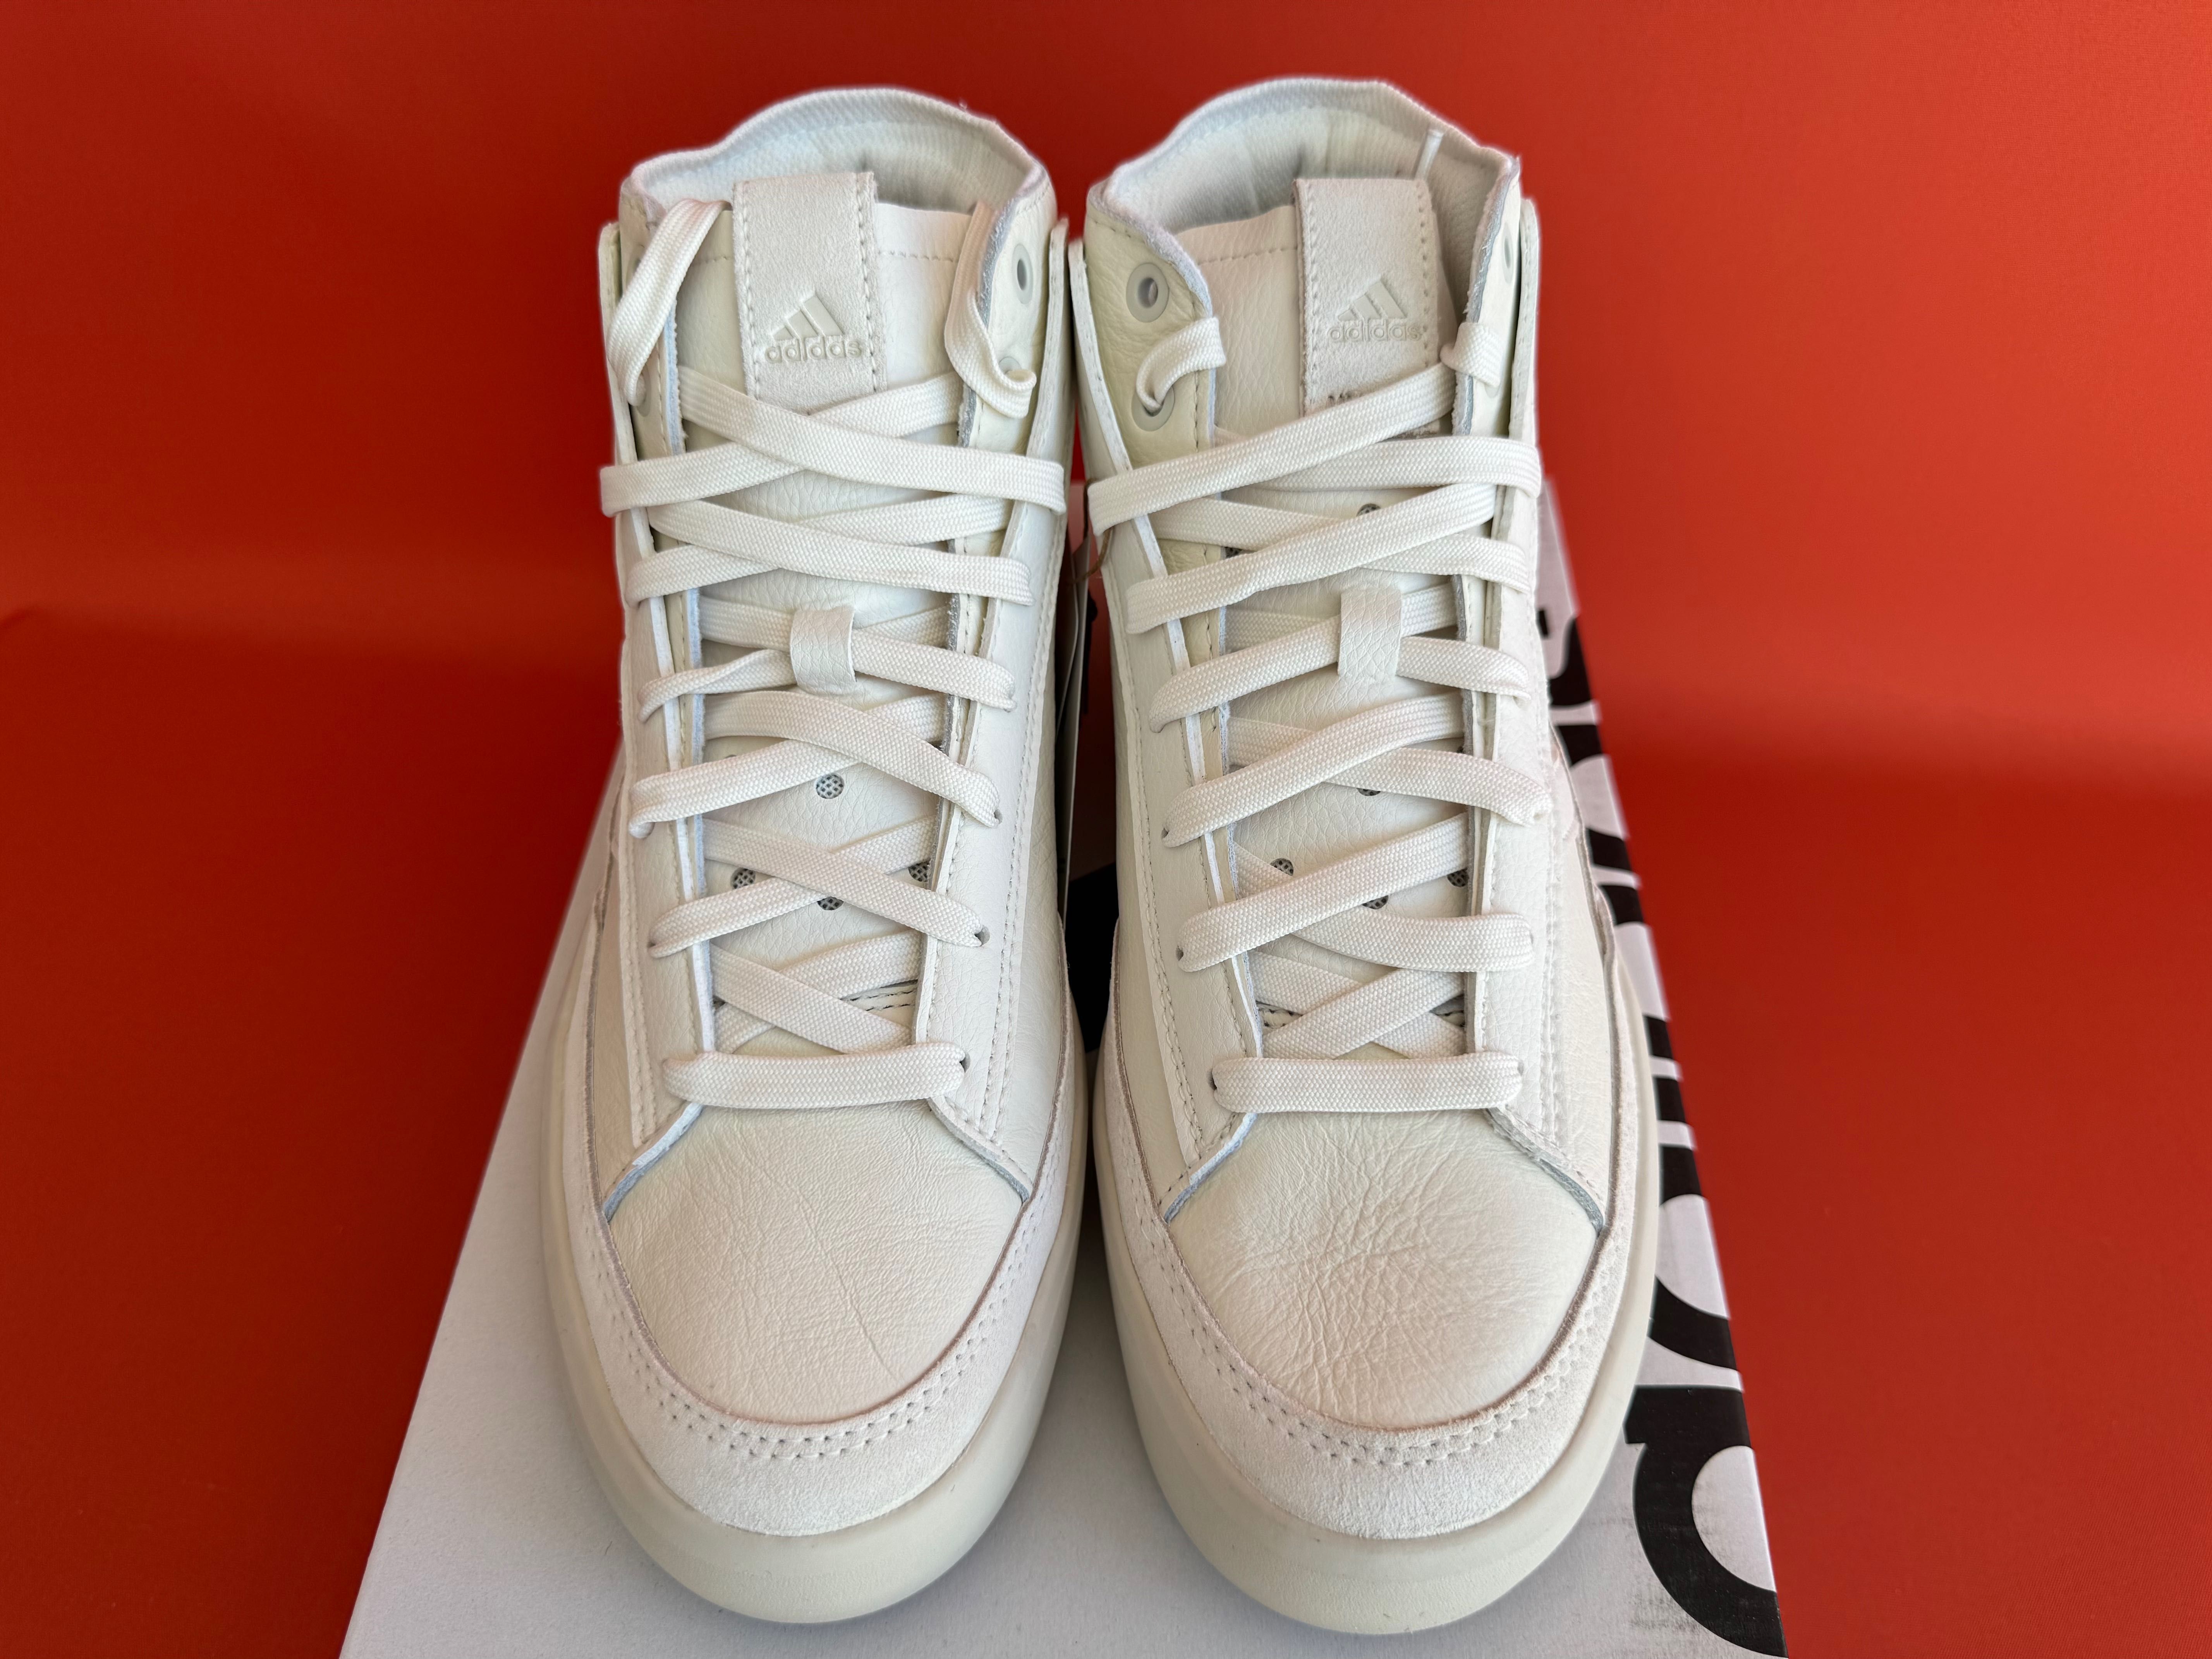 Adidas ZNSored оригинал женские кожаные кроссовки кеды размер 39.5 NEW